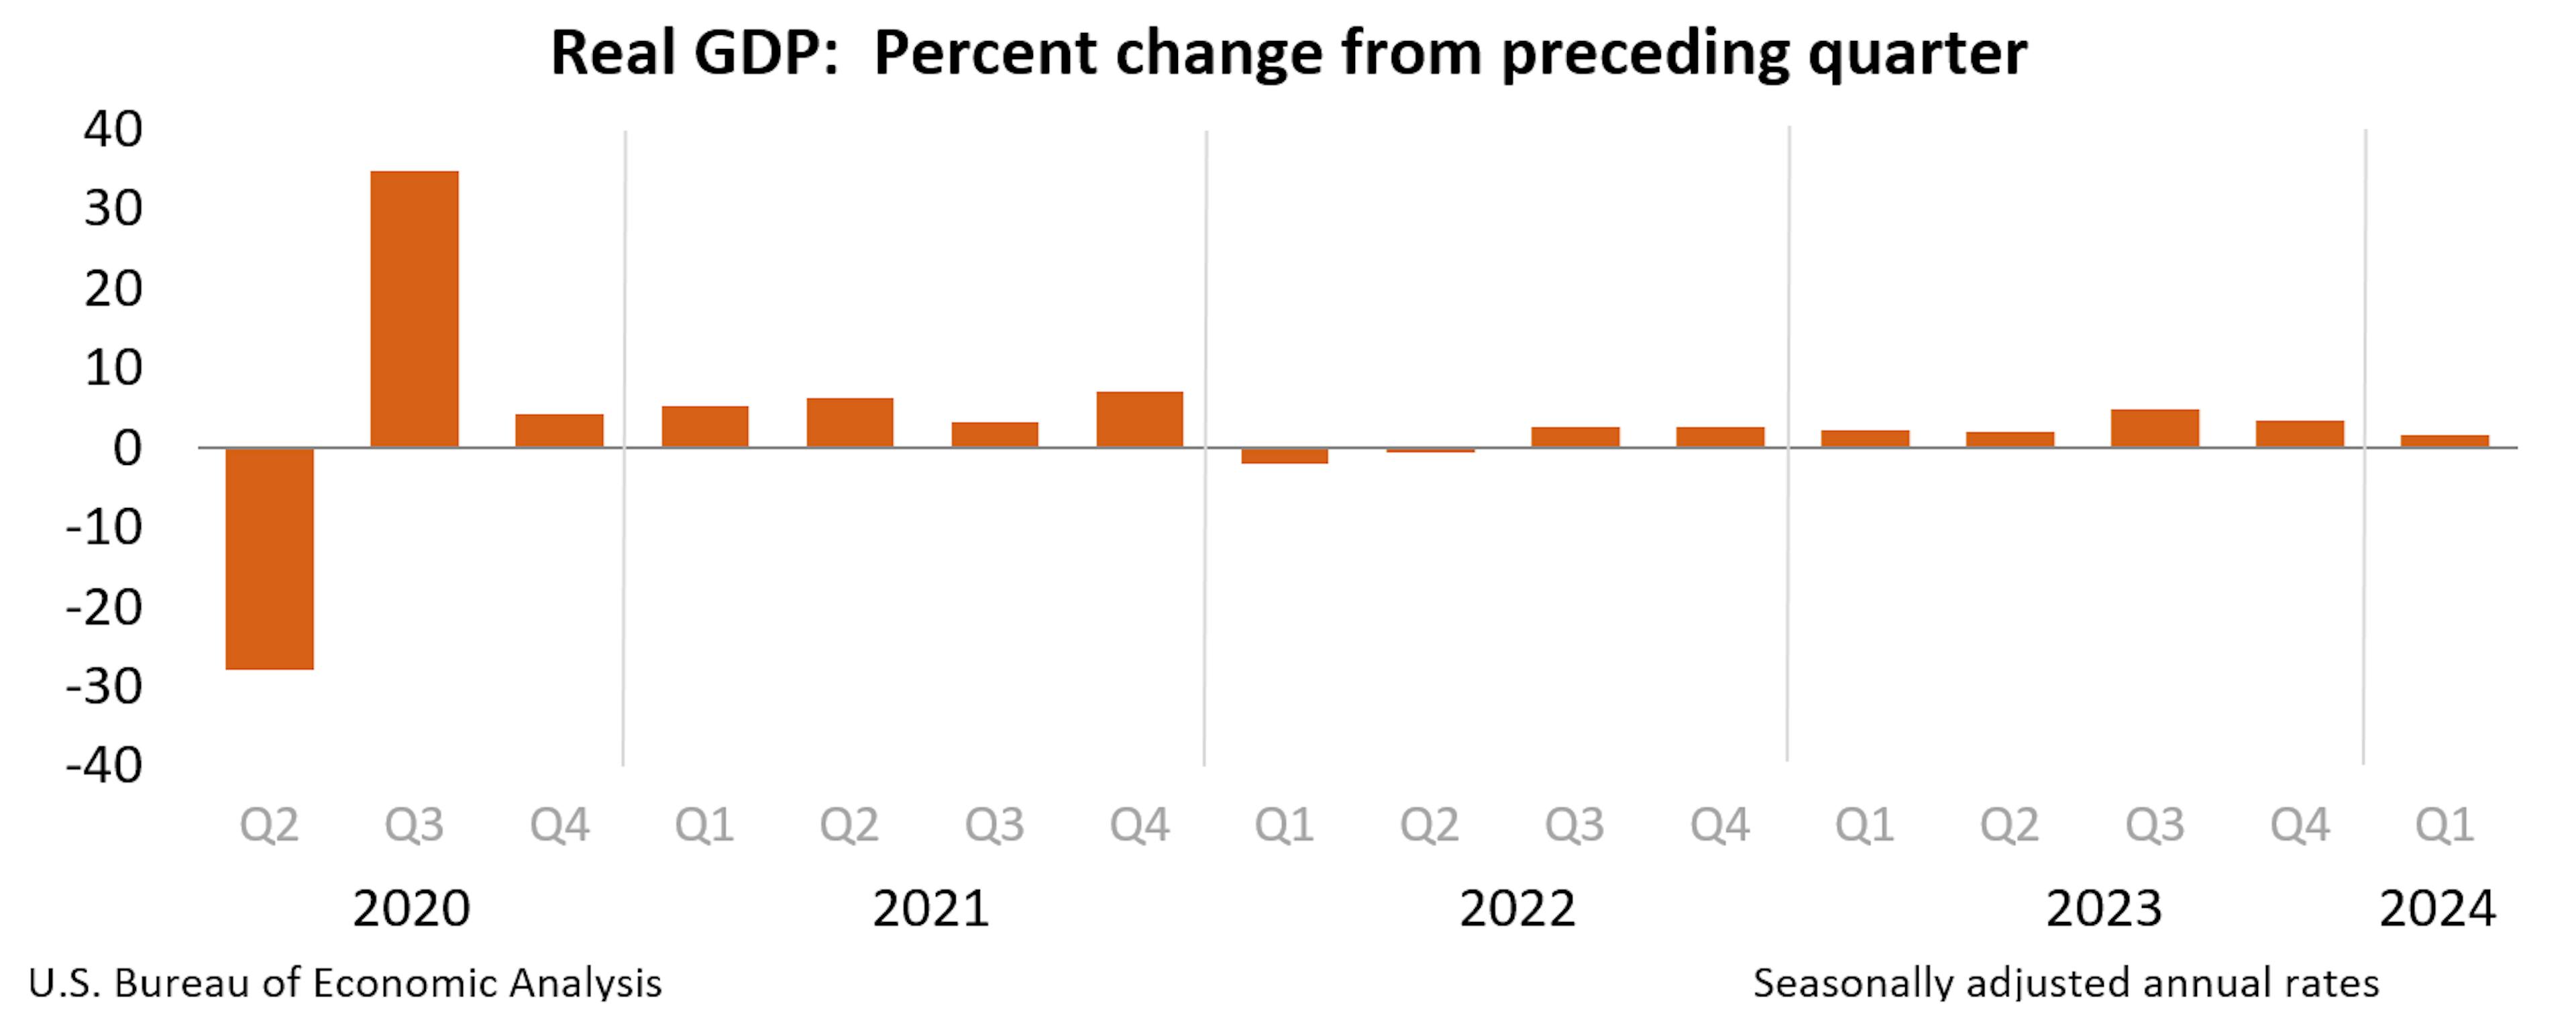 Real GDO: percent change from preceding quarter